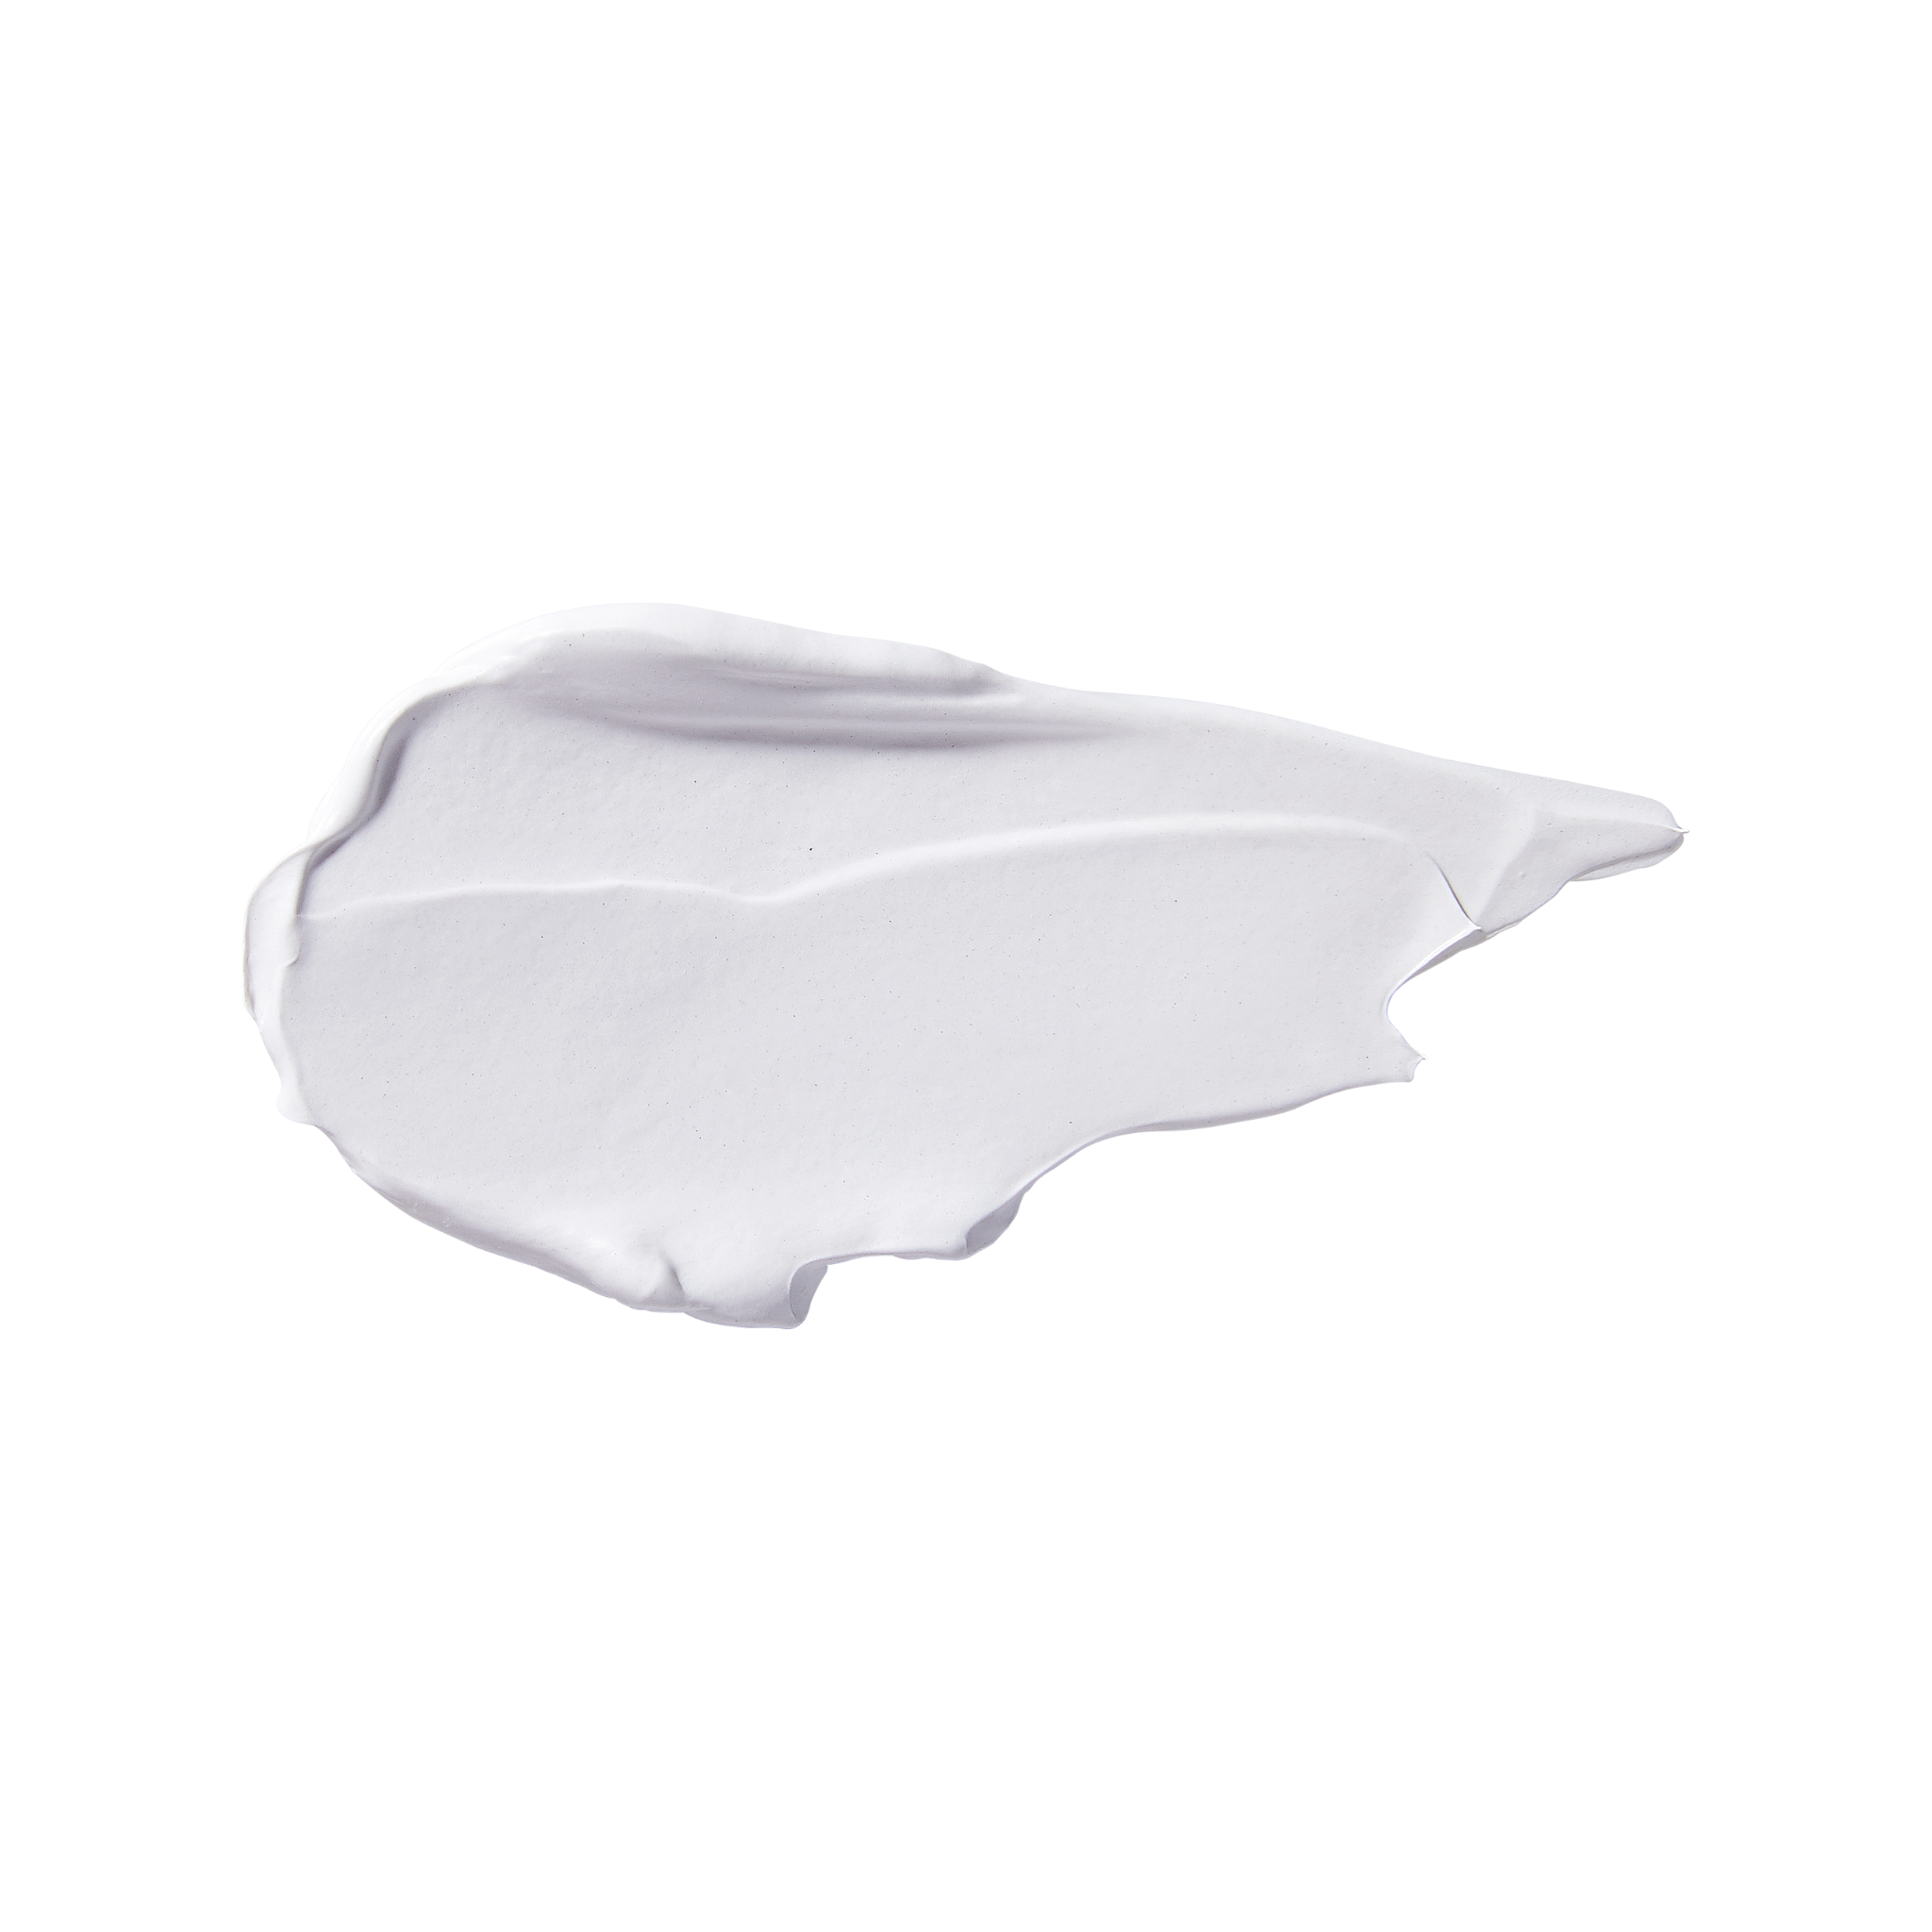 SKINFOOD Egg White Perfect Pore Cleansing Foam (150ml)